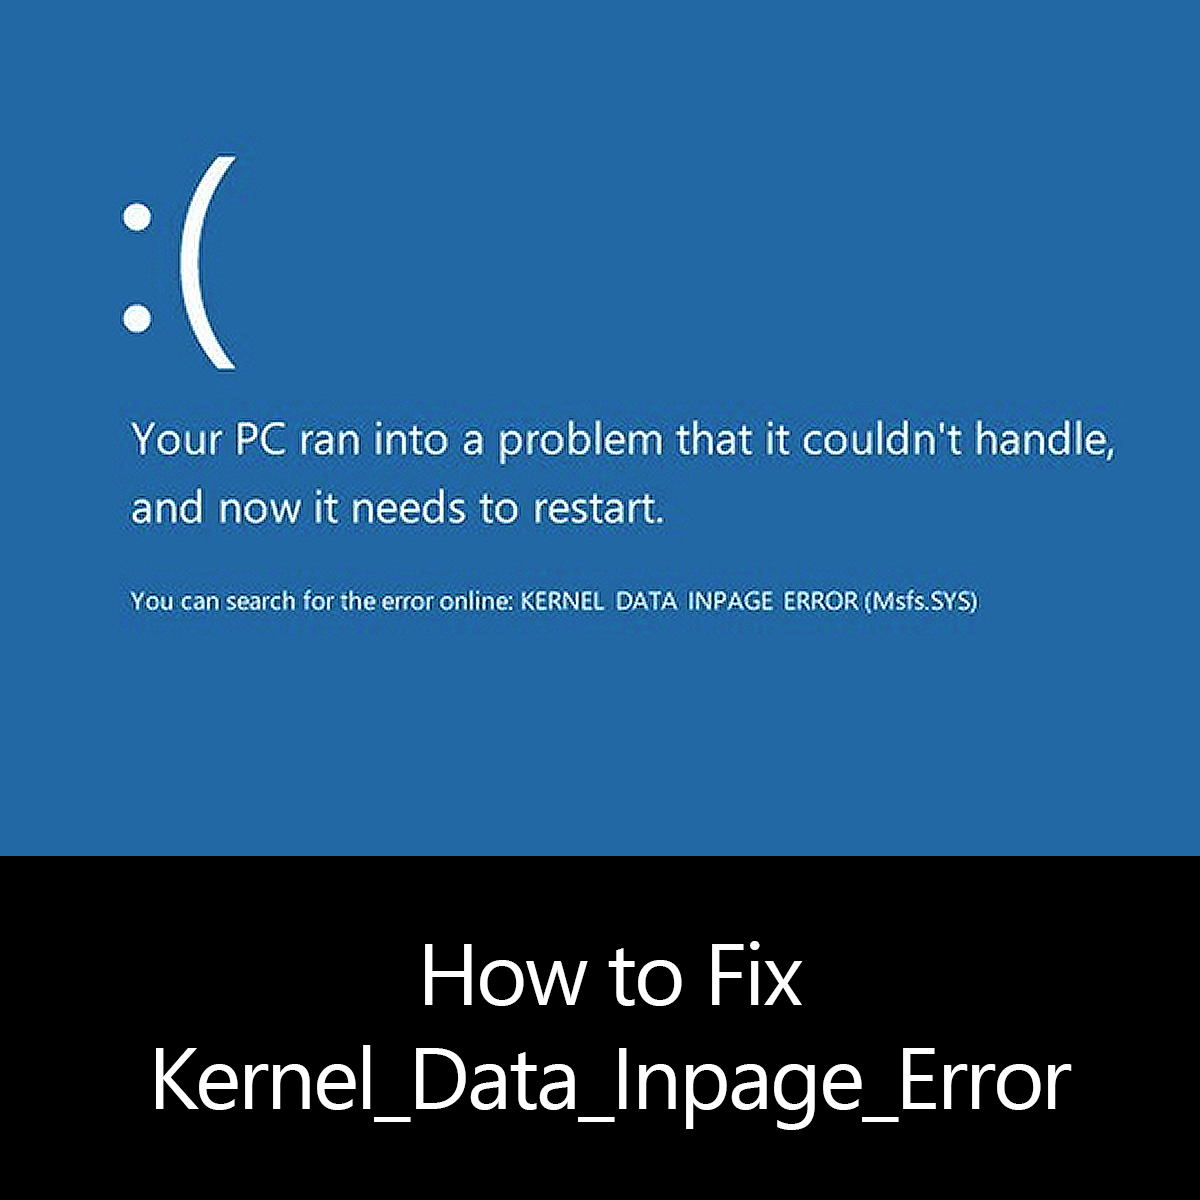 kernel_data_inpage_error 0x0000007a